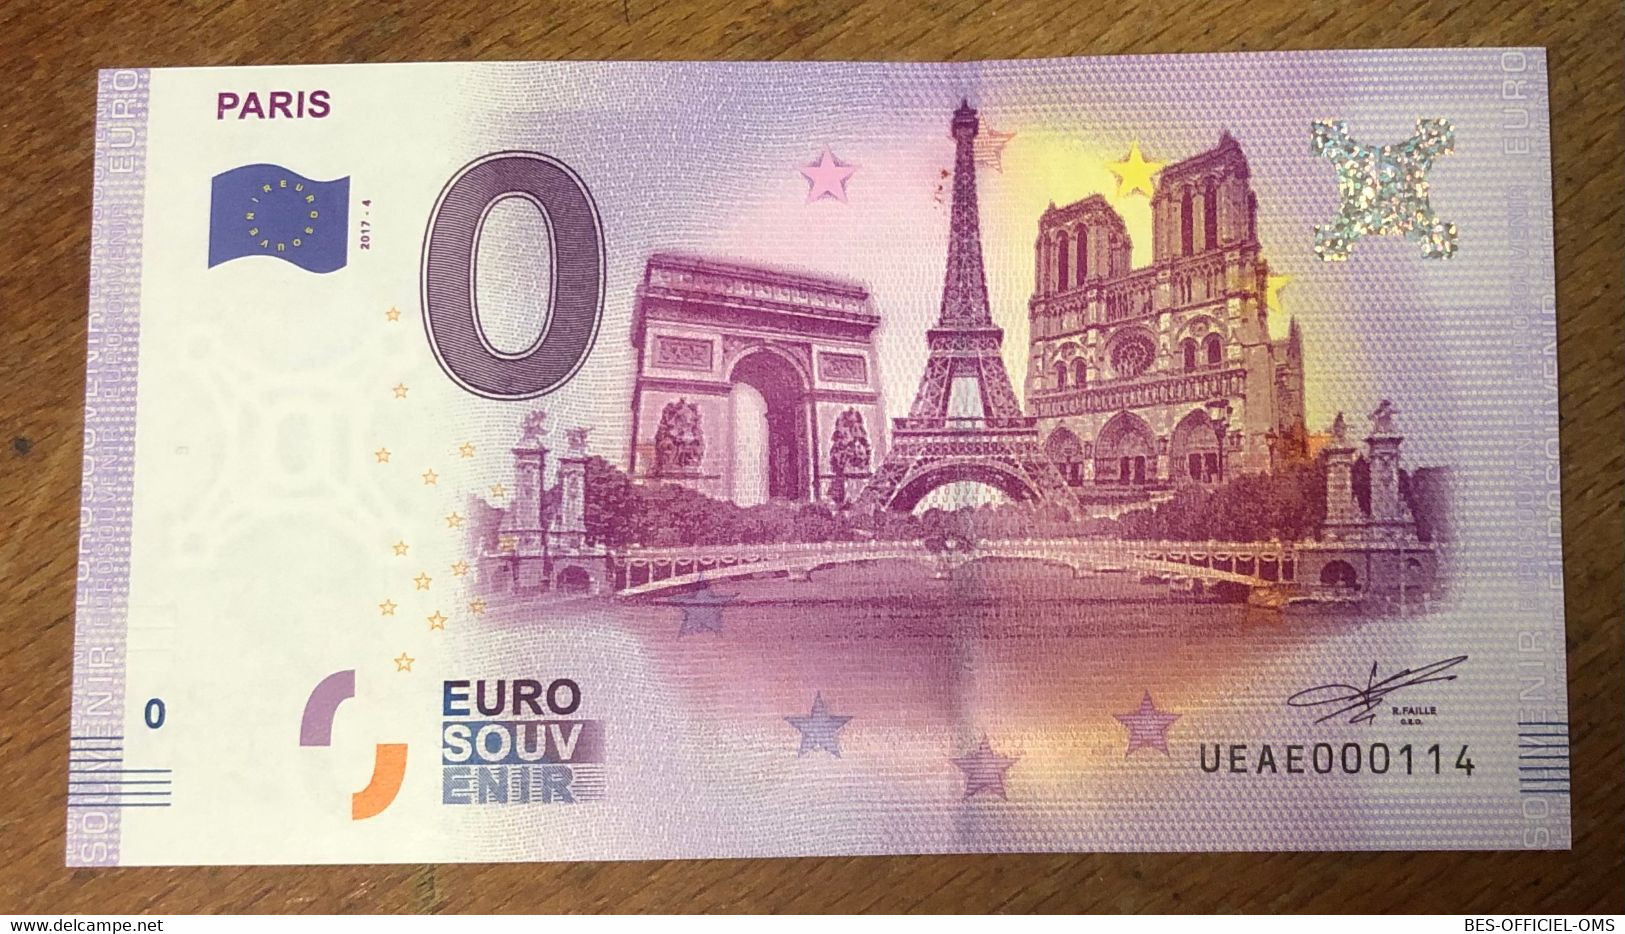 2017 BILLET 0 EURO SOUVENIR DPT 75 PARIS 4 MONUMENTS ZERO 0 EURO SCHEIN BANKNOTE PAPER MONEY BANK - Pruebas Privadas